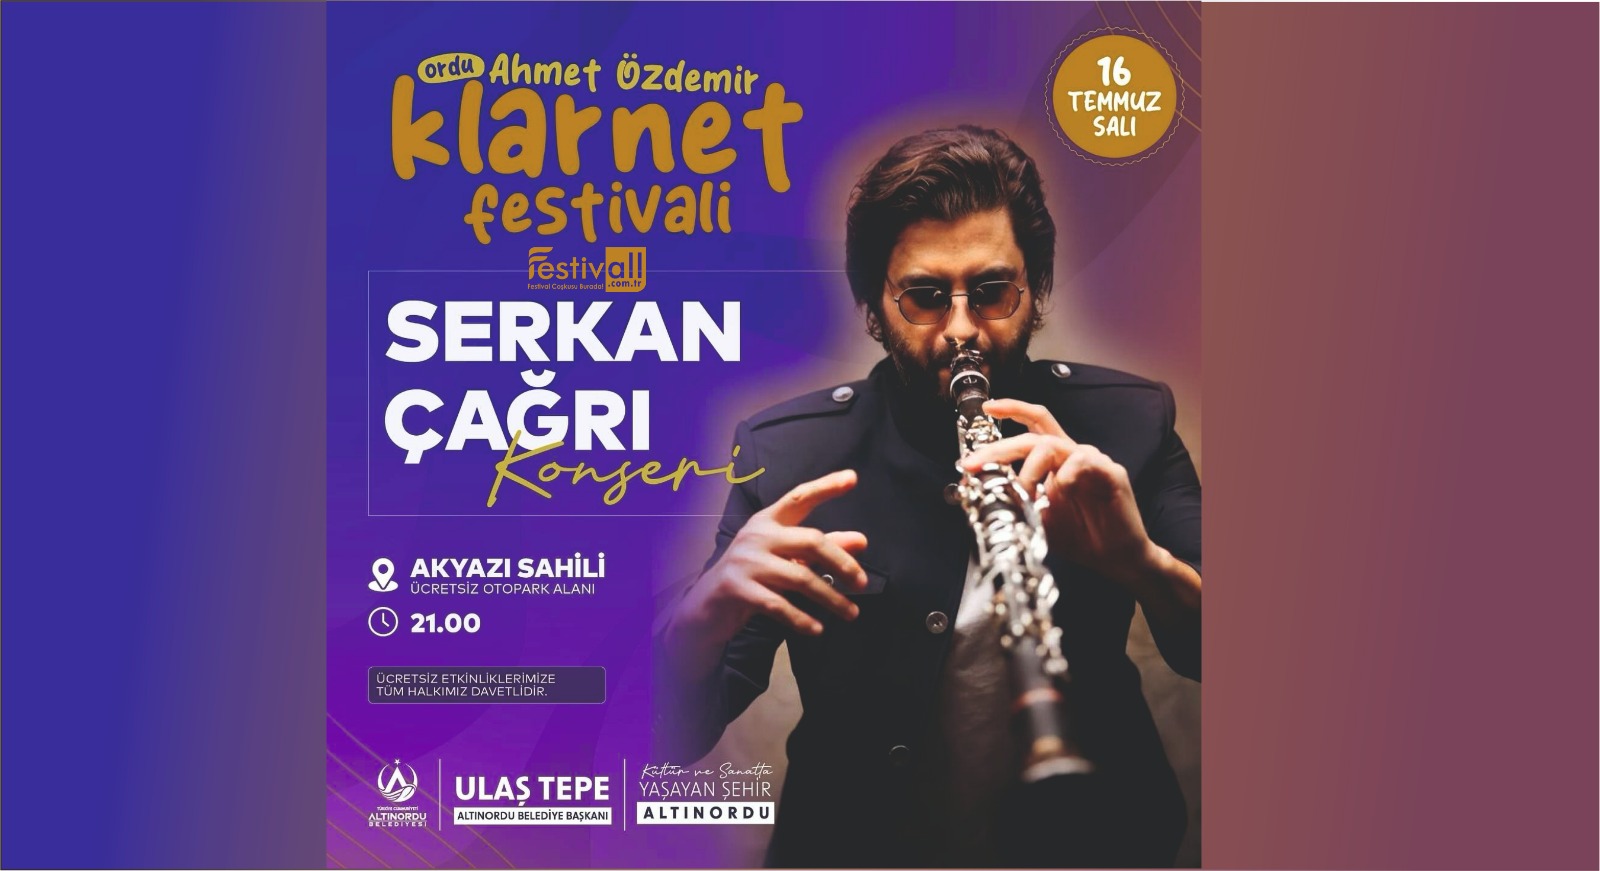 ordu-ahmet-ozdemir-klarnet-festivali-3365